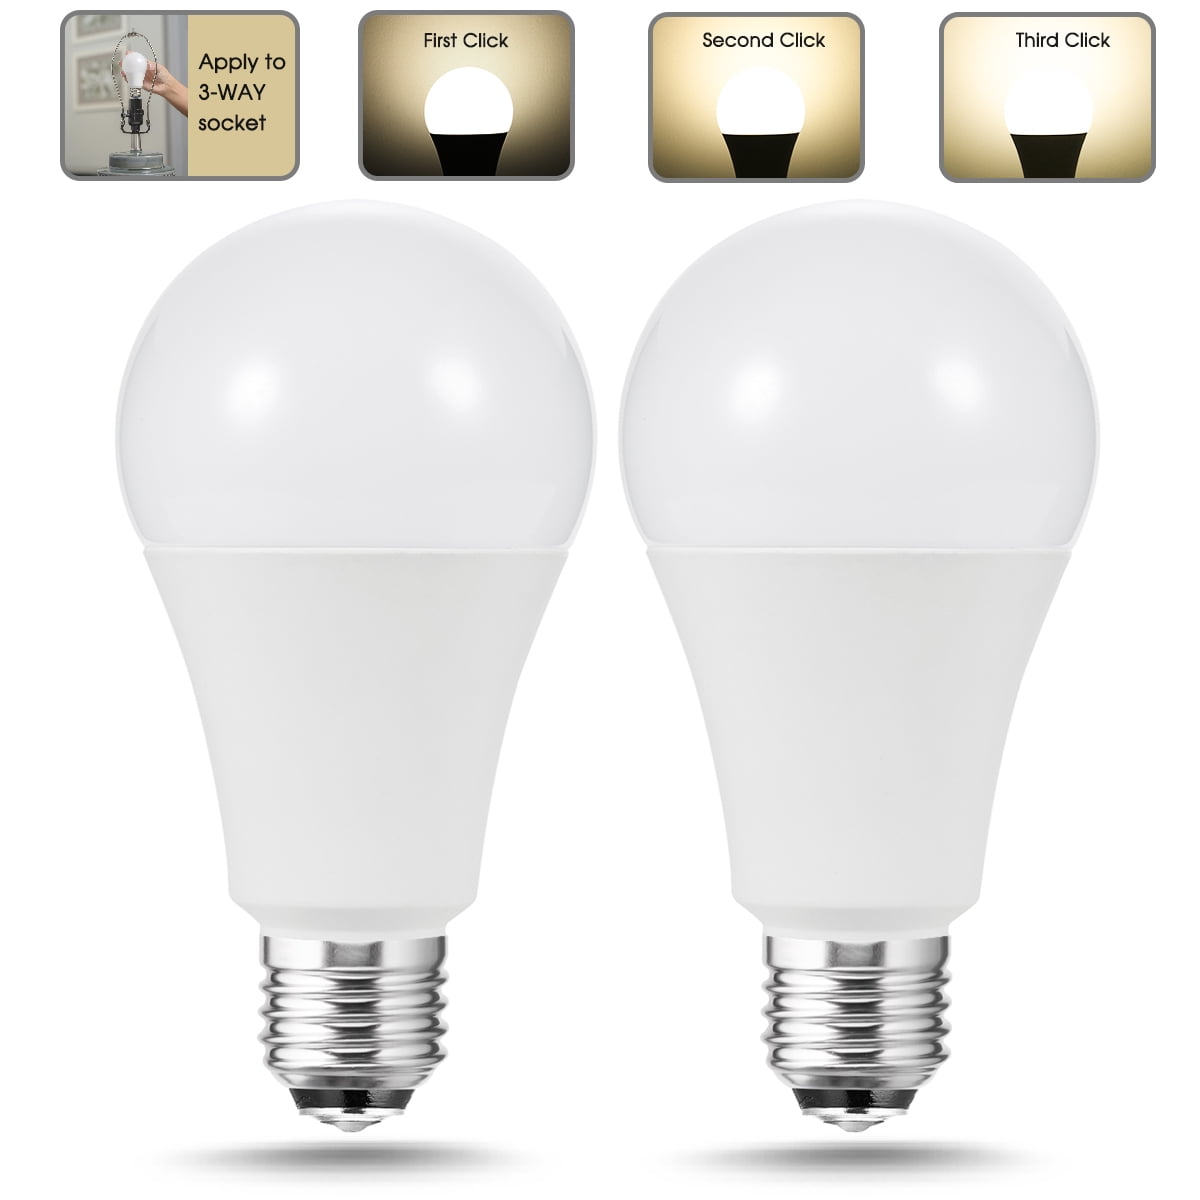 Yansun 3 Way Led Light Bulb 50 100 150w, Can You Put A Regular Light Bulb In Three Way Lamp